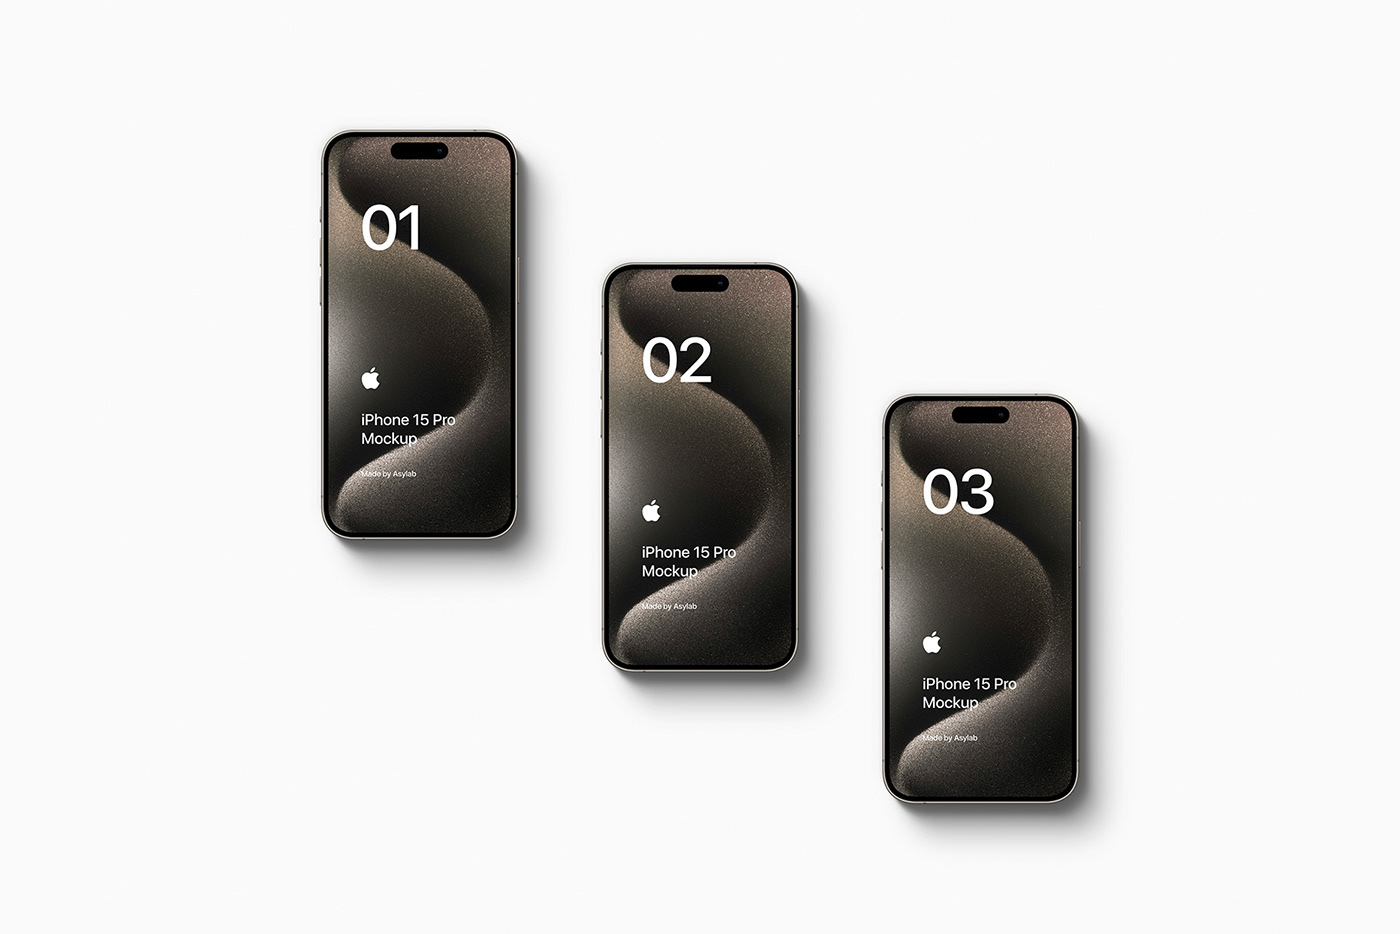 iphone 15 pro iphone 15 pro mockup psd Mockup mock up apple device smartphone template bundle